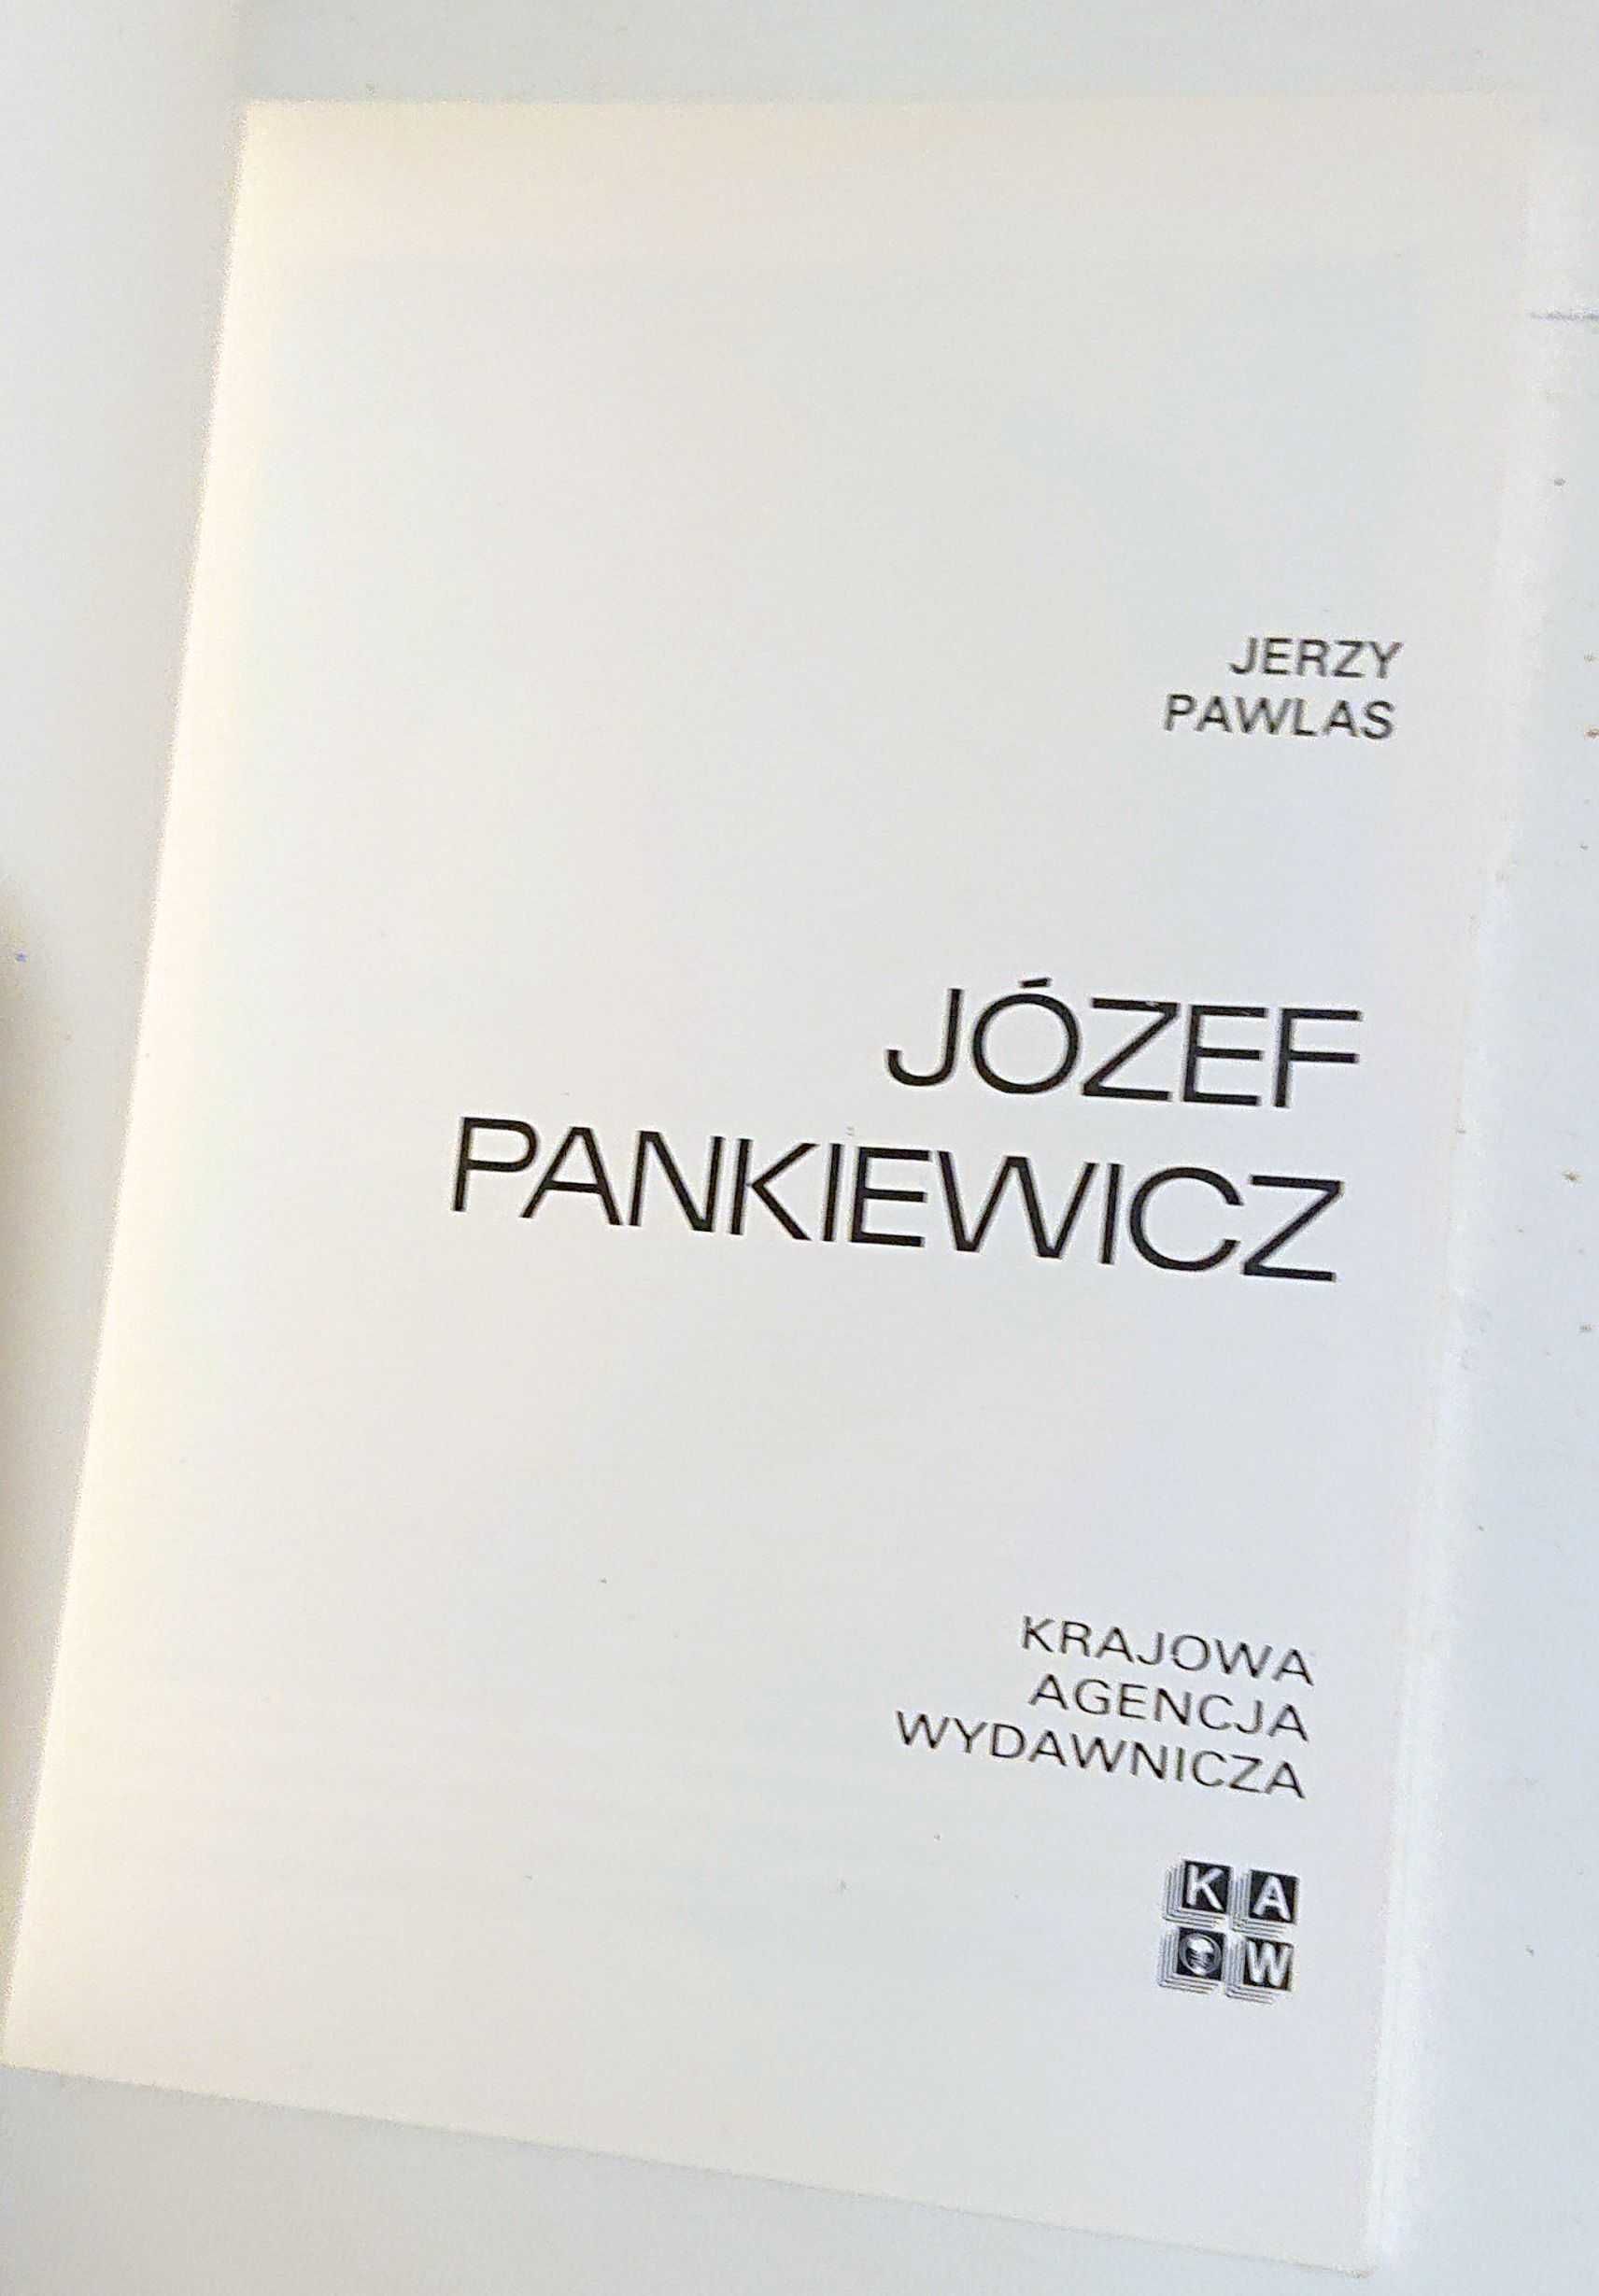 "Józef Pankiewicz" - KAW seria "abc" - lata 80-te